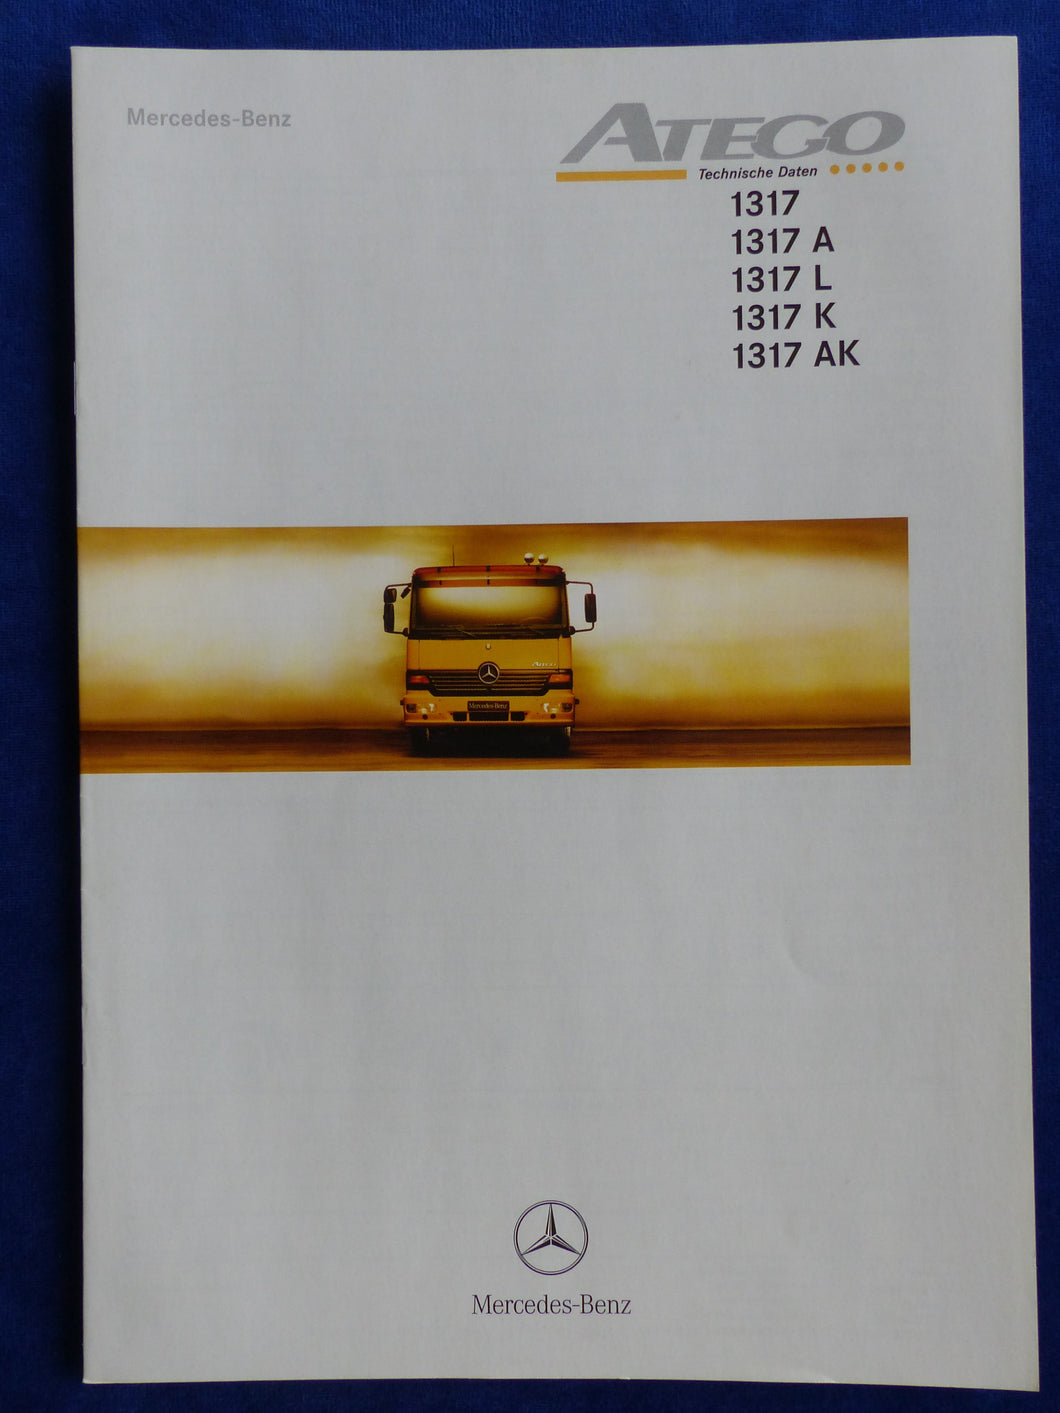 Mercedes-Benz Atego 1317 - Technische Daten MJ 1999 - Prospekt Brochure 08.1998